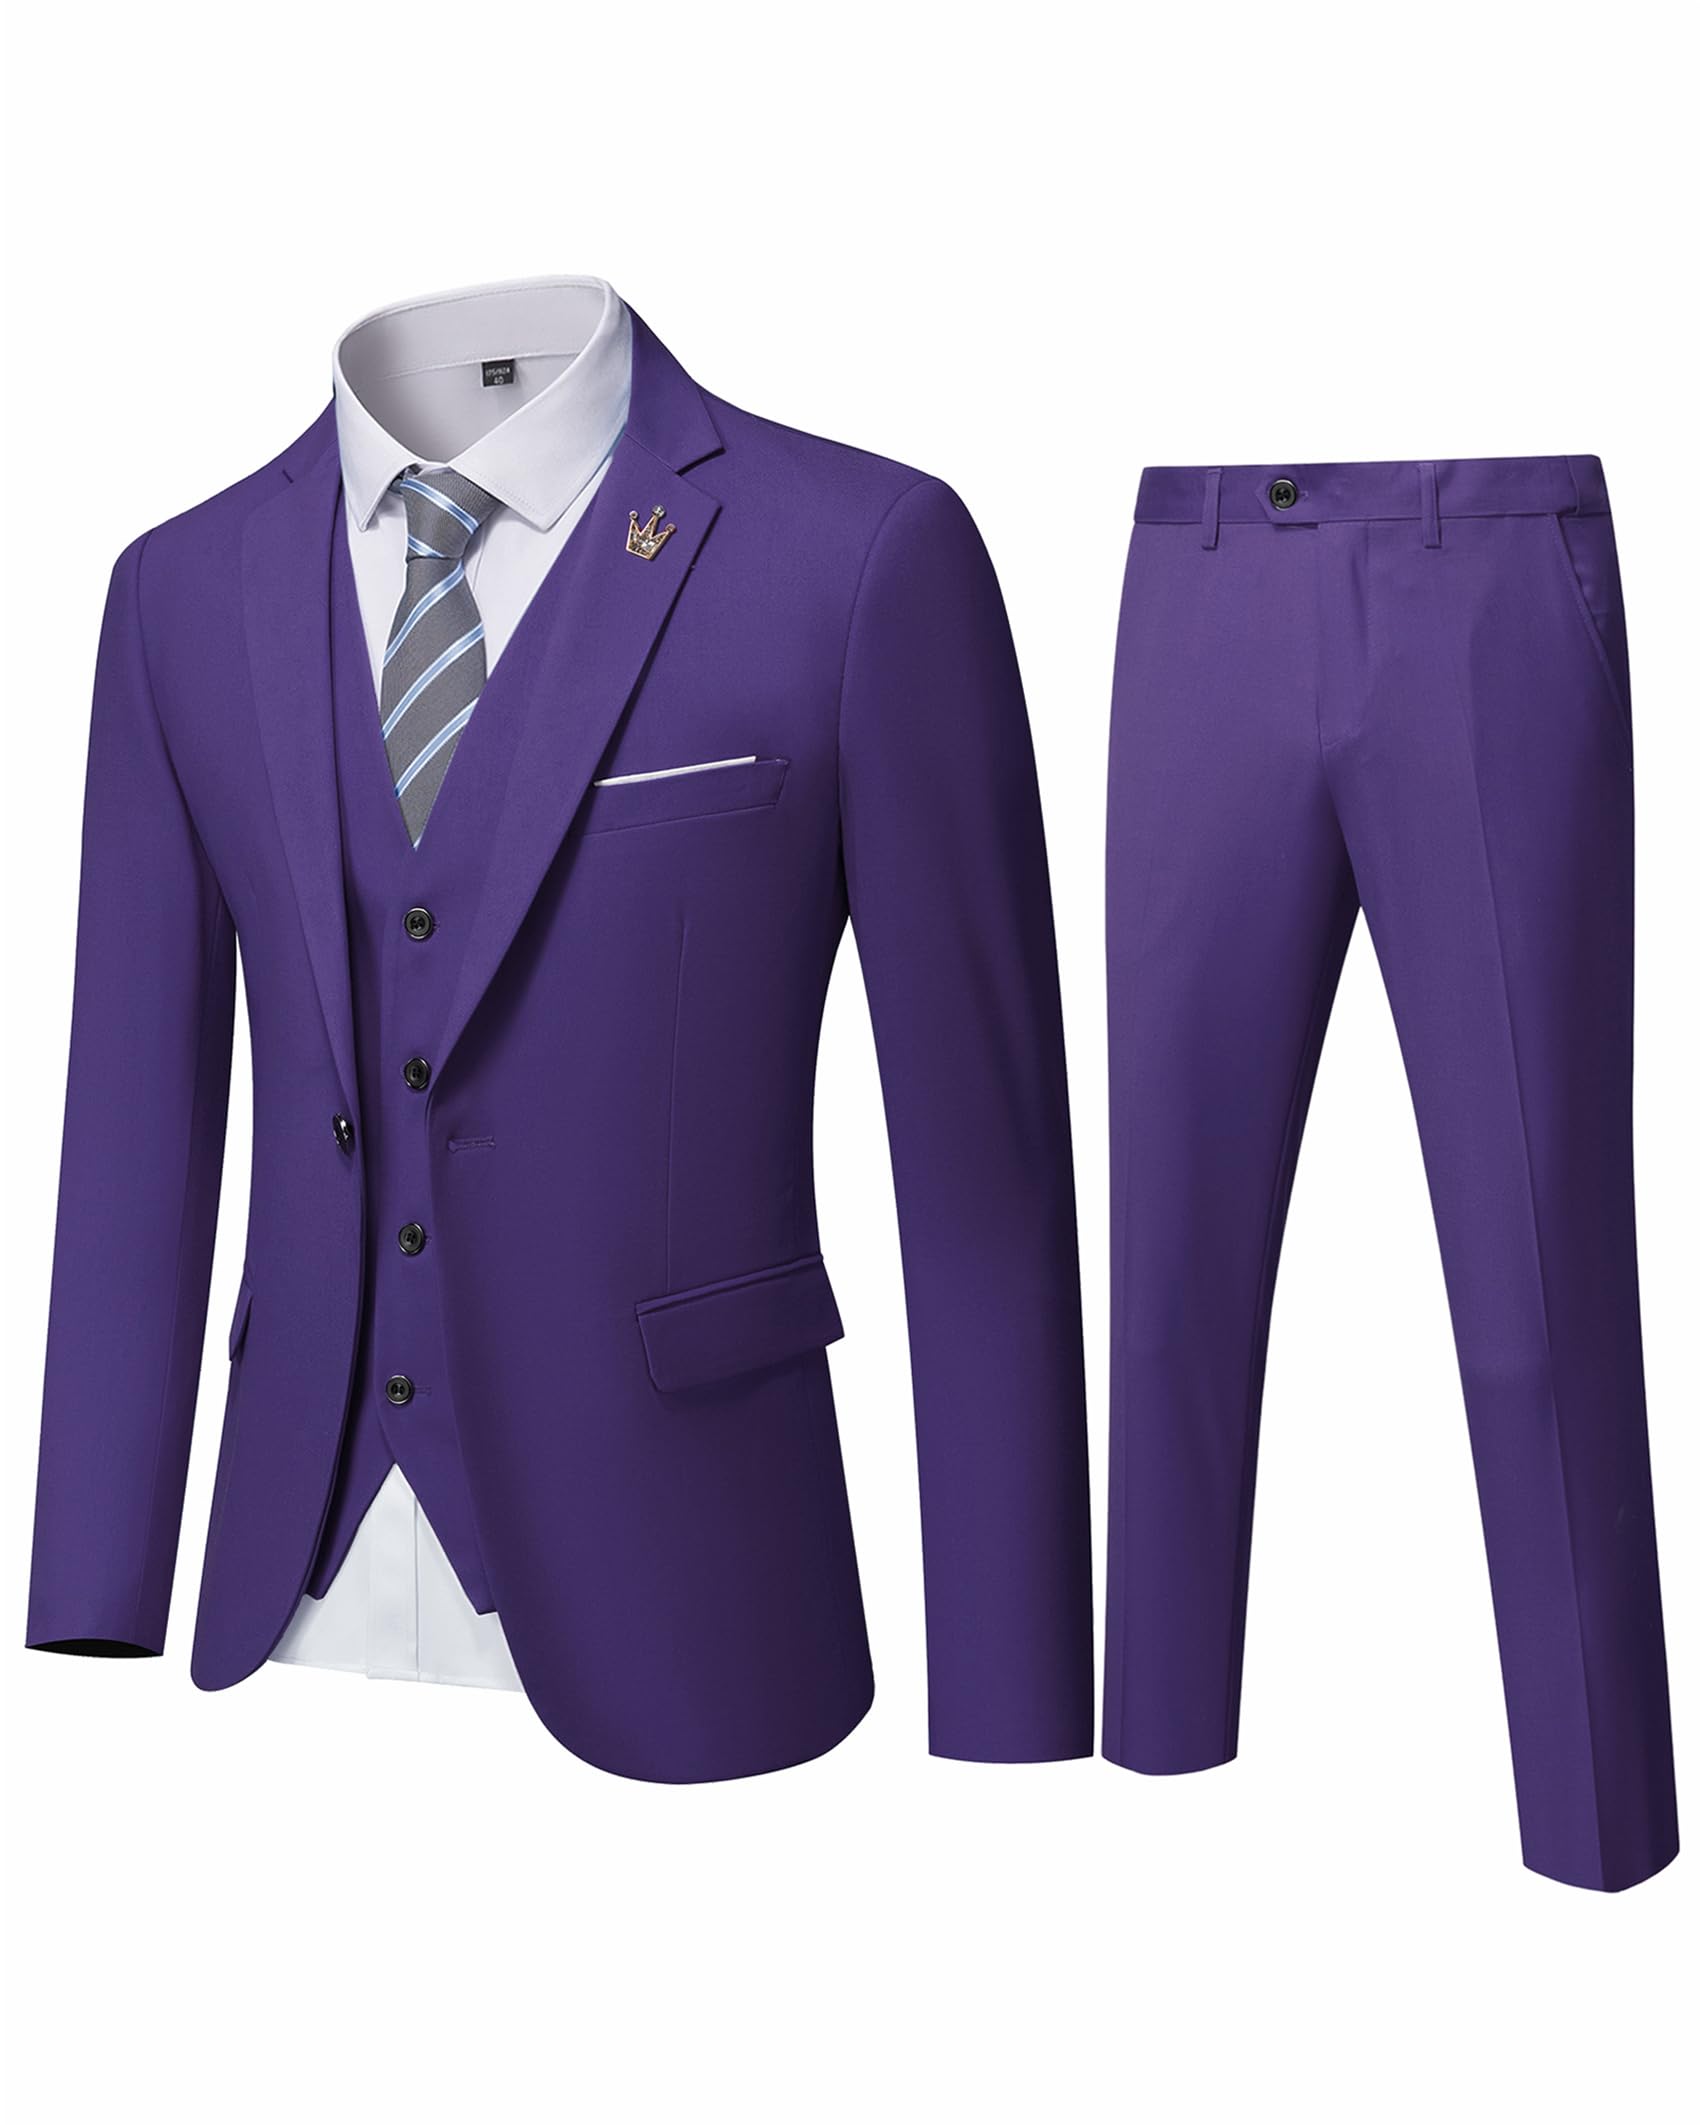 EastSide Herren Slim Fit 3-teiliger Anzug, Ein-Knopf-Blazer-Set, Jacke Weste & Hose, deep purple, XX-Large